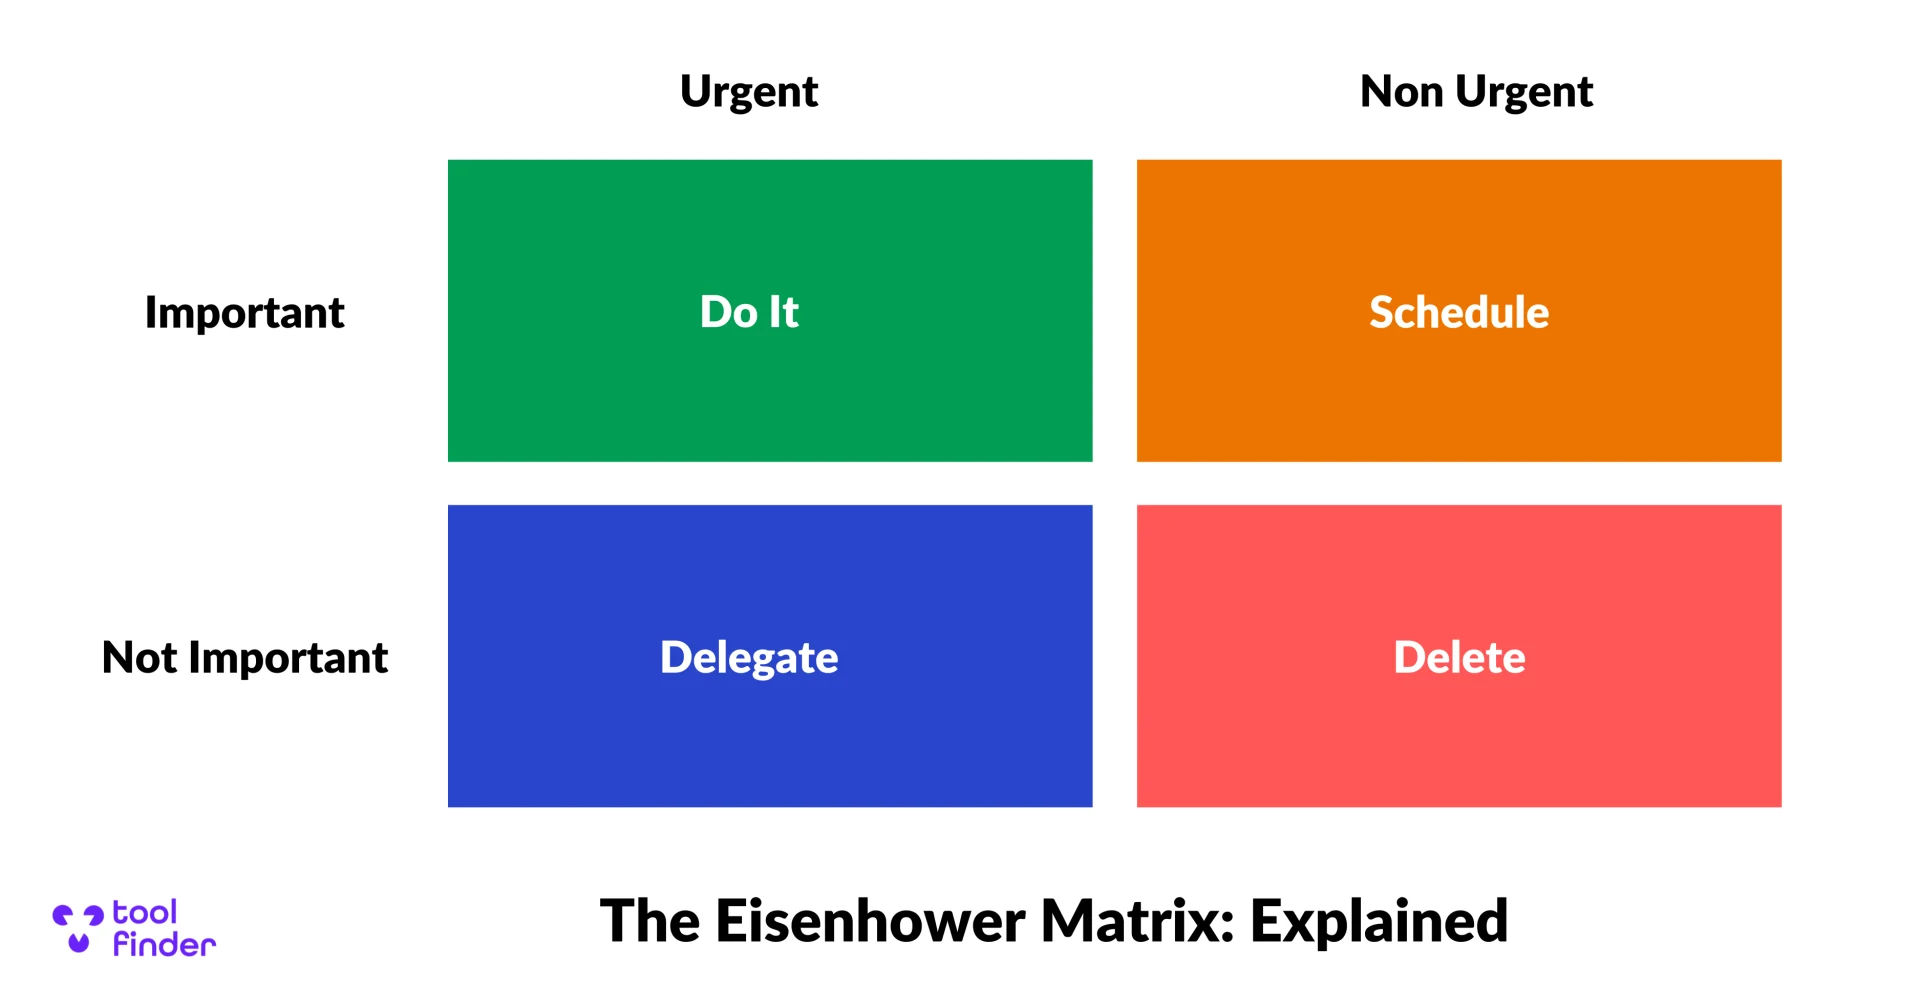 The Eisenhower Matrix, Tool Finder, Explained